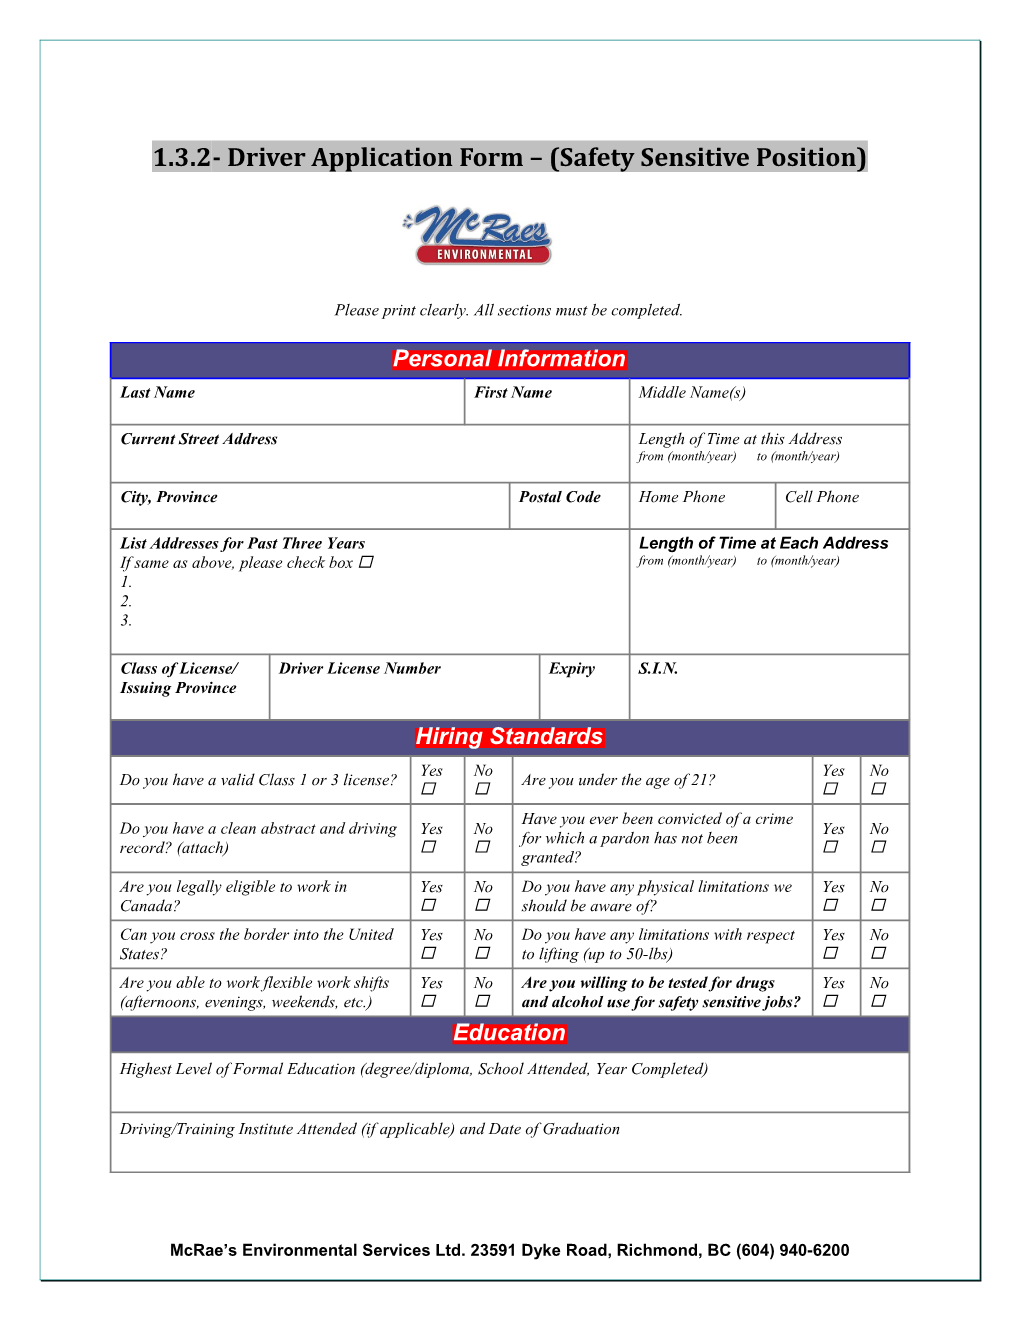 1.3.2- Driver Application Form (Safety Sensitive Position)